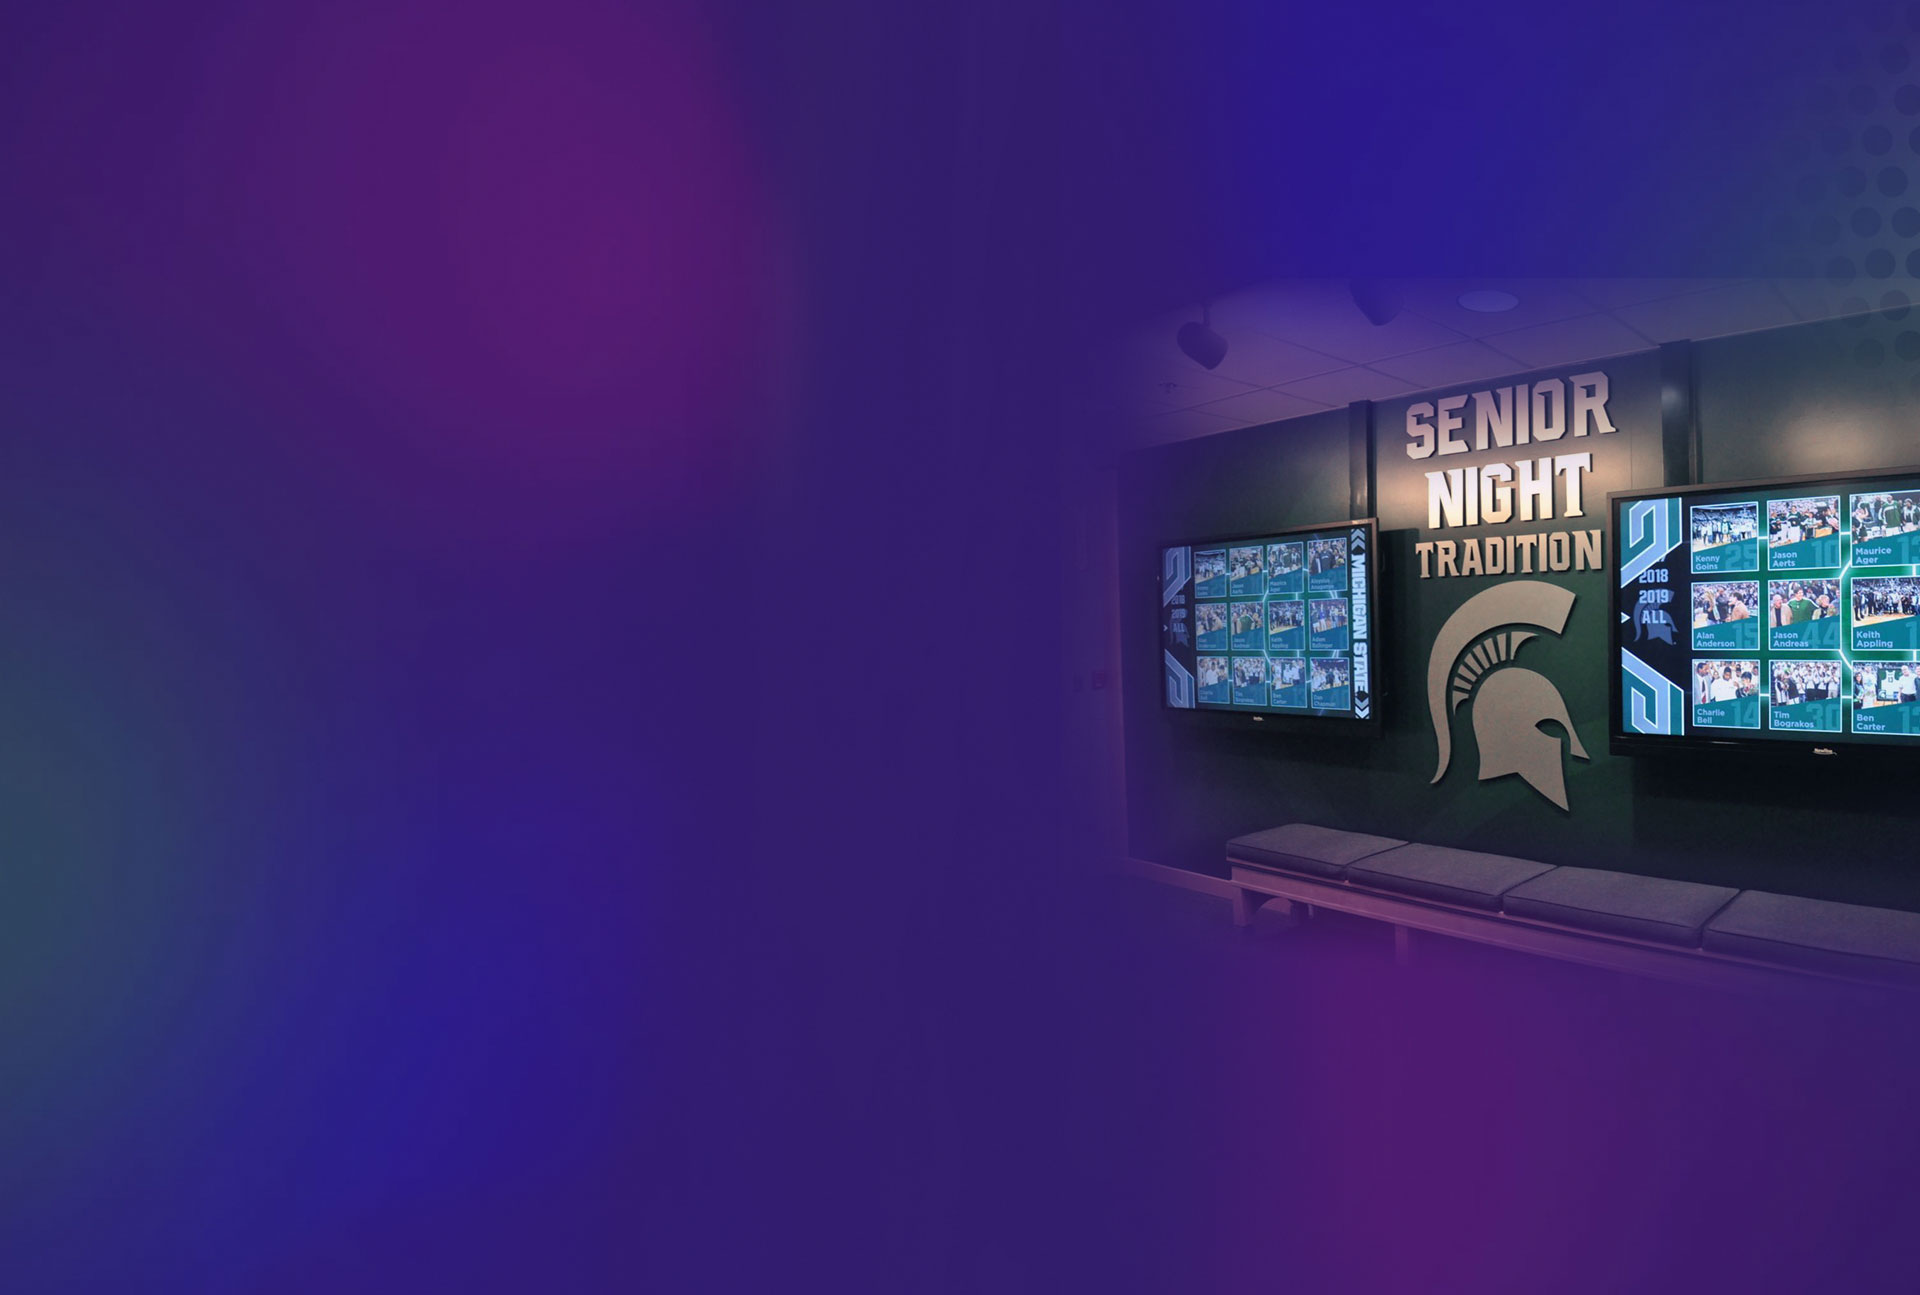 Hero image of Michigan State University wall of fame using BrightSign digital signage player display technology